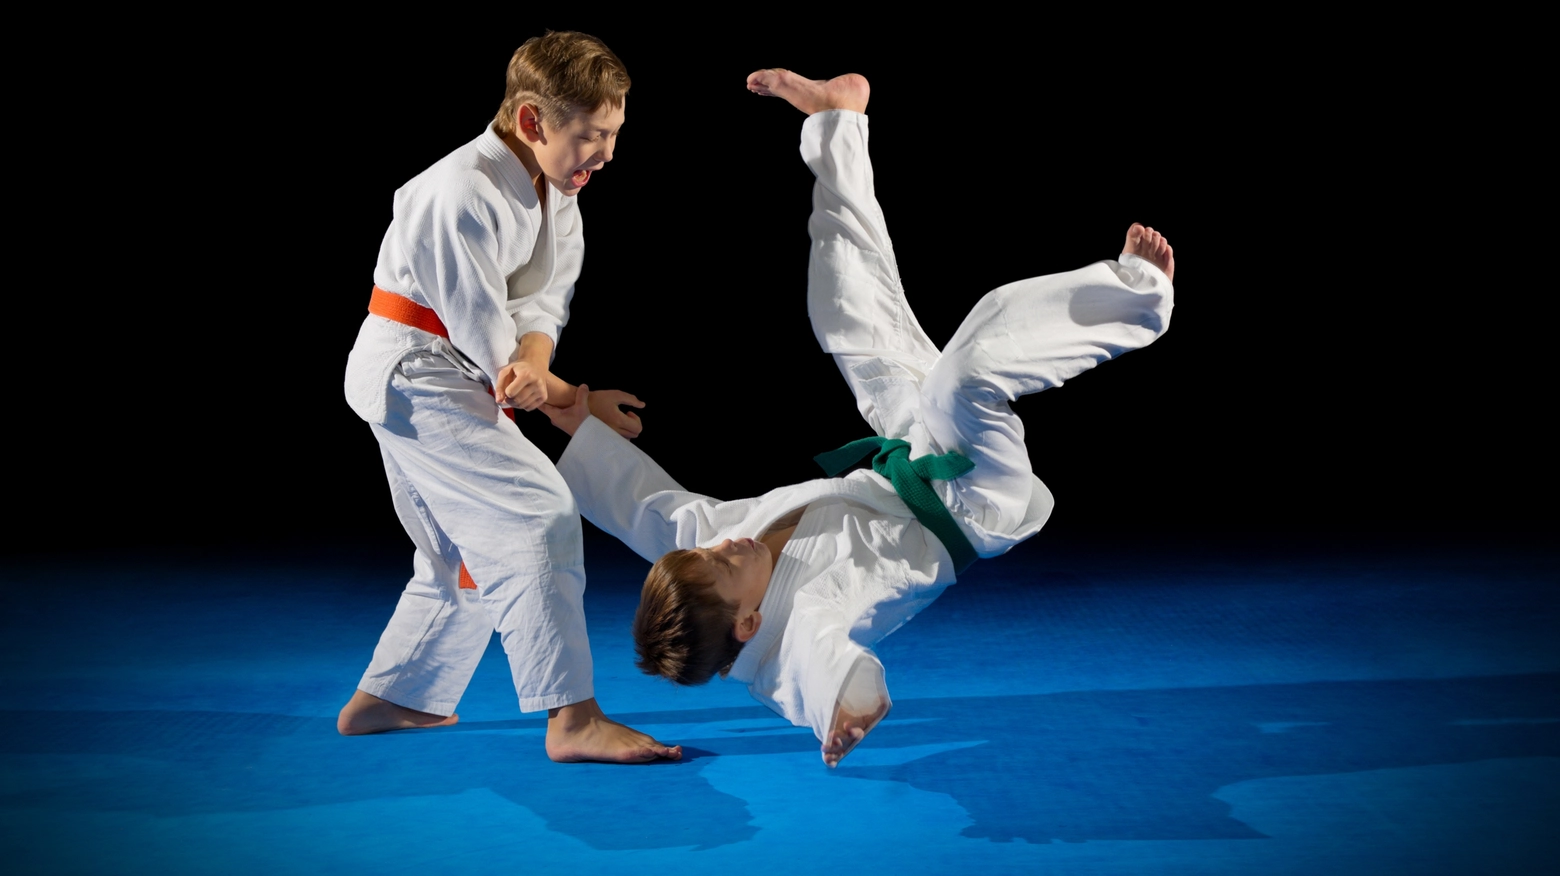 Un match di judo tra ragazzini (foto generica)